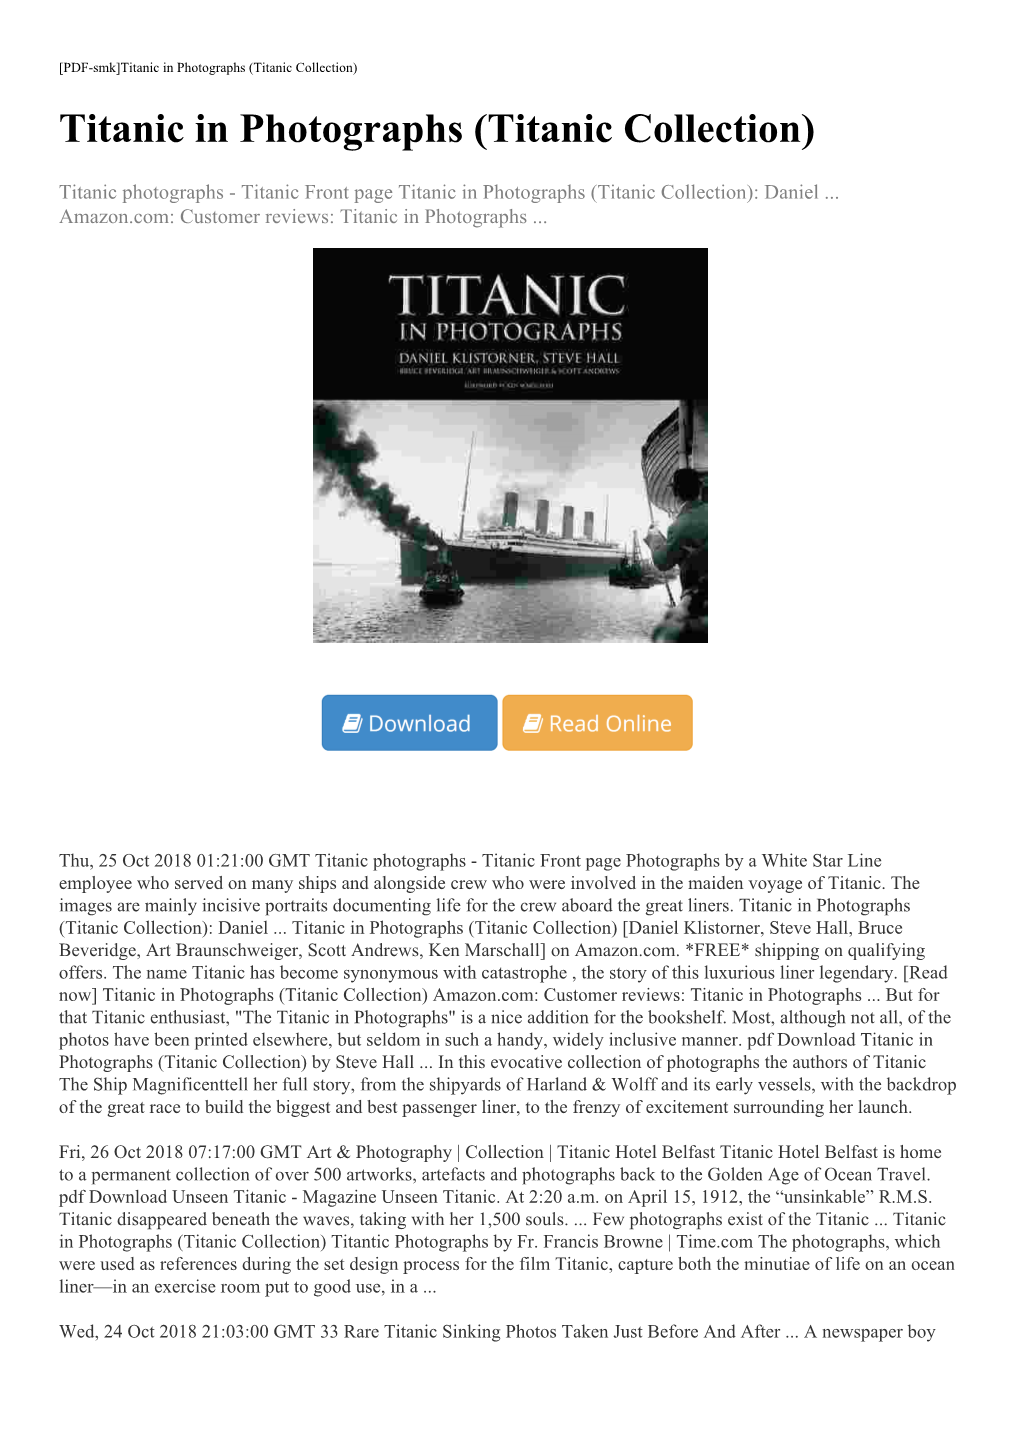 Titanic in Photographs (Titanic Collection) Titanic in Photographs (Titanic Collection)